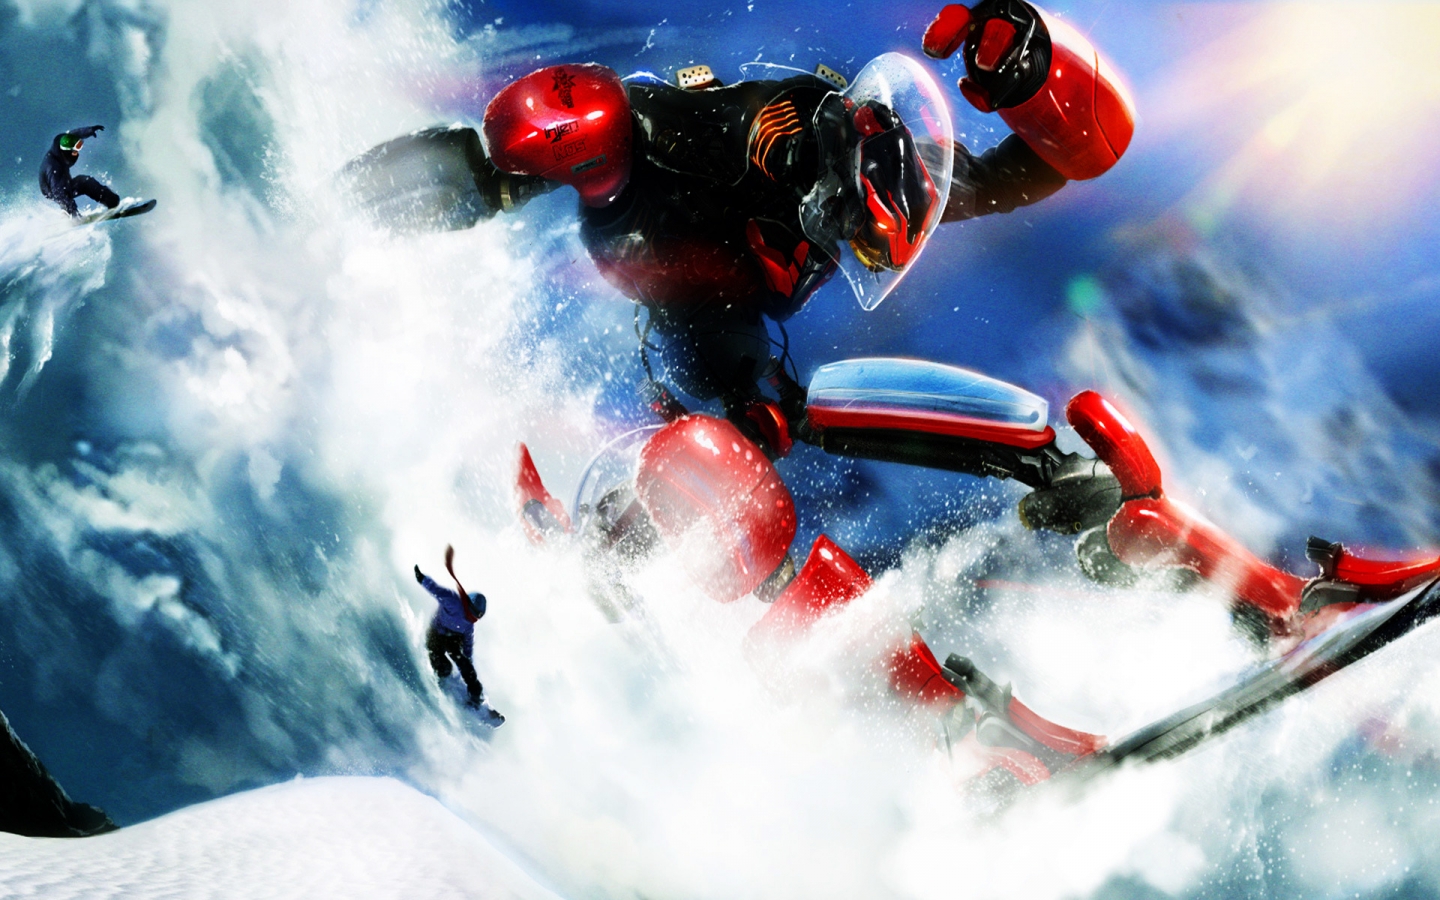 Fantasy Snowboarding for 1440 x 900 widescreen resolution